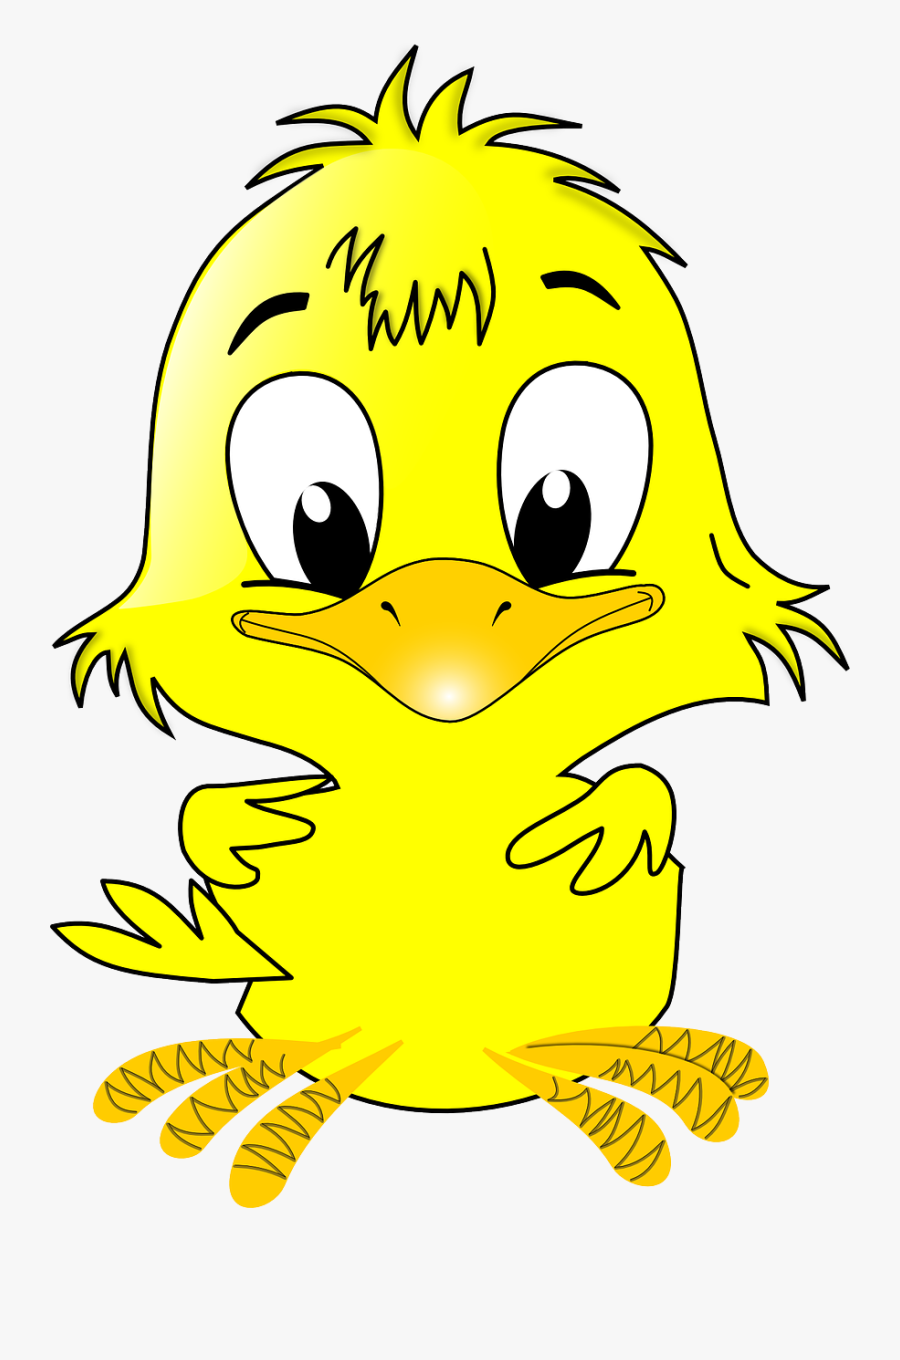 Chick Easter Animal Free Photo - Freue Mich Auf Euren Besuch, Transparent Clipart